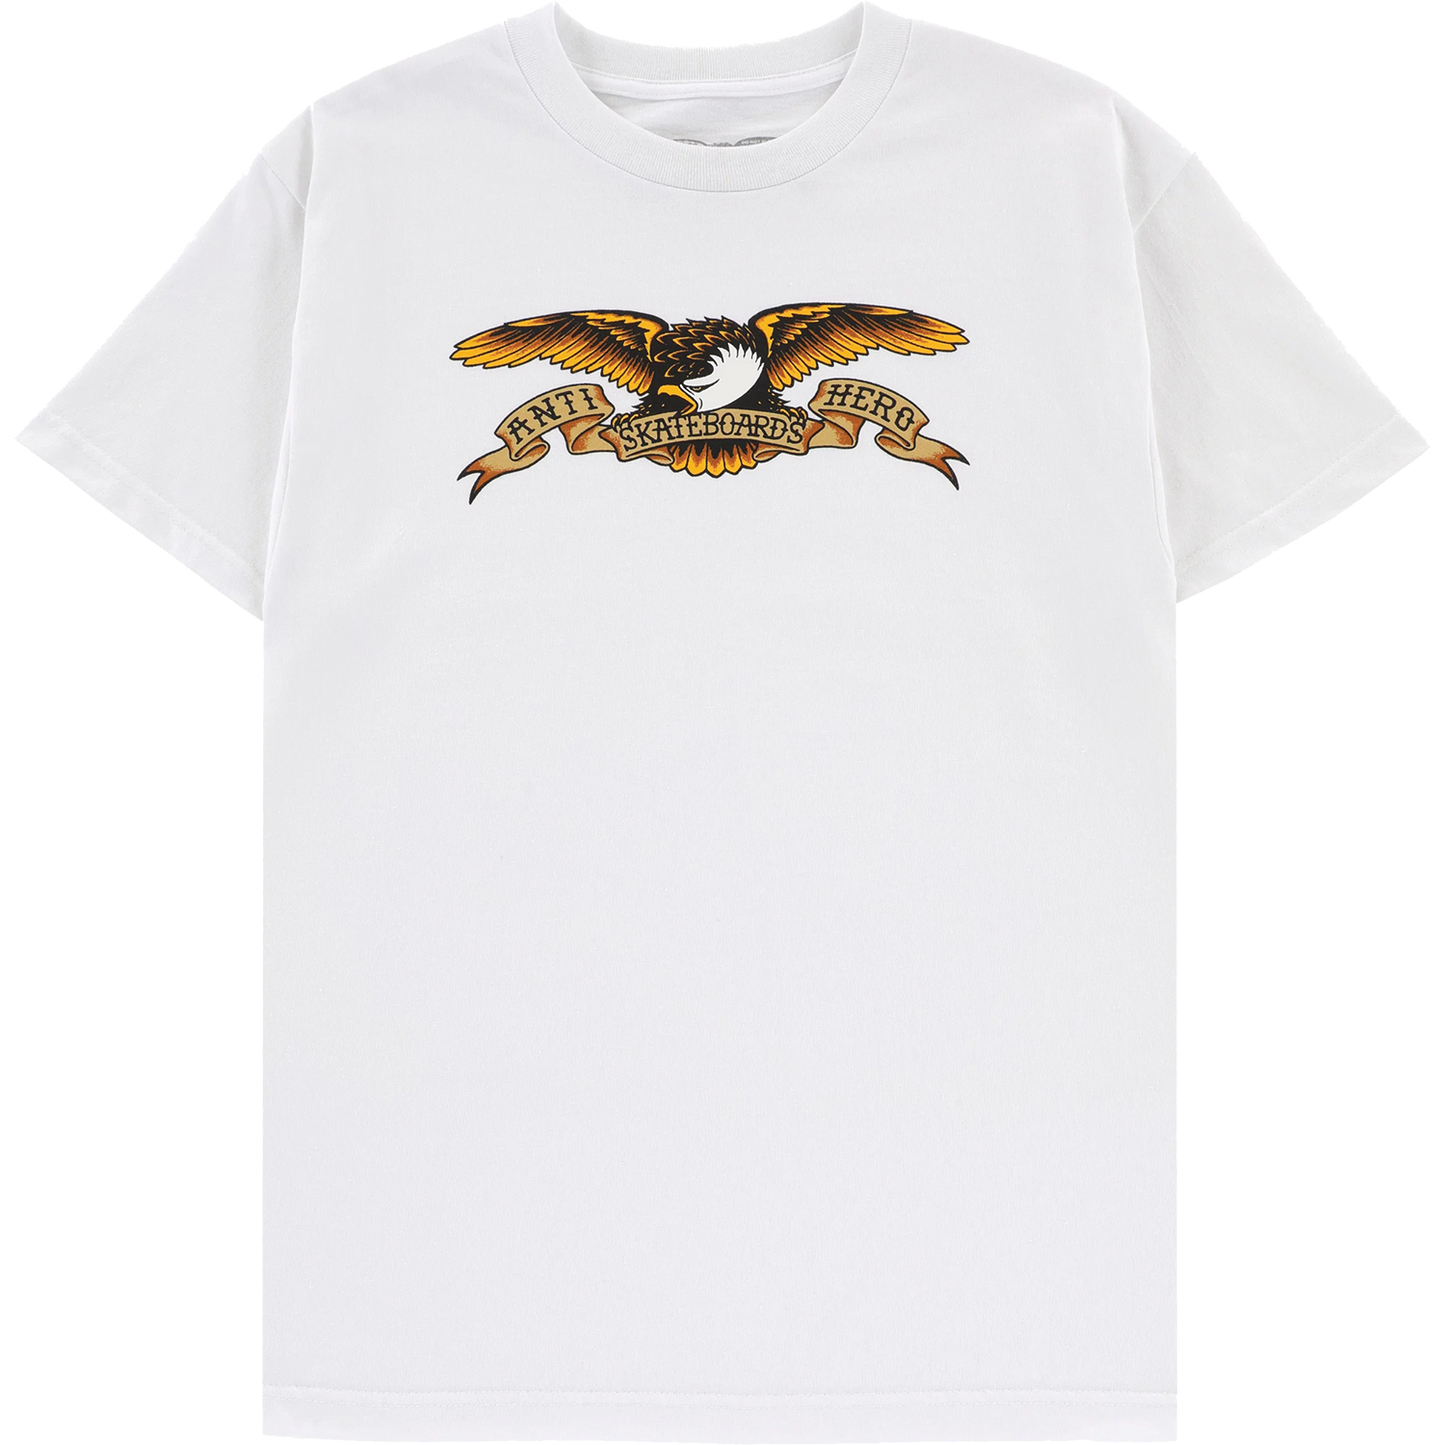 Antihero Eagle T-Shirt - Size: SMALL White/Blue Multi